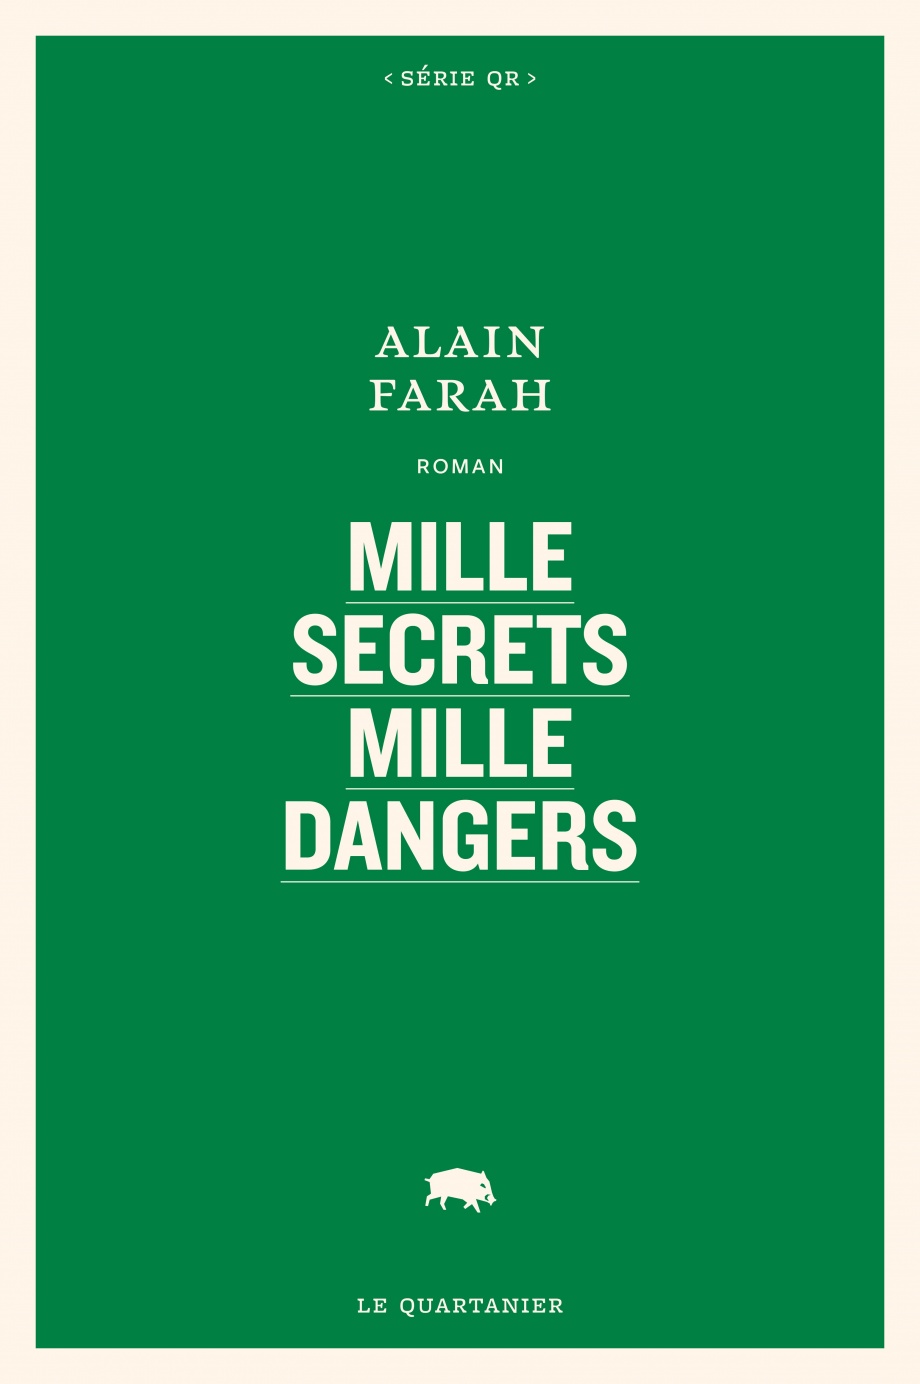 Roman Mille secrets mille danger